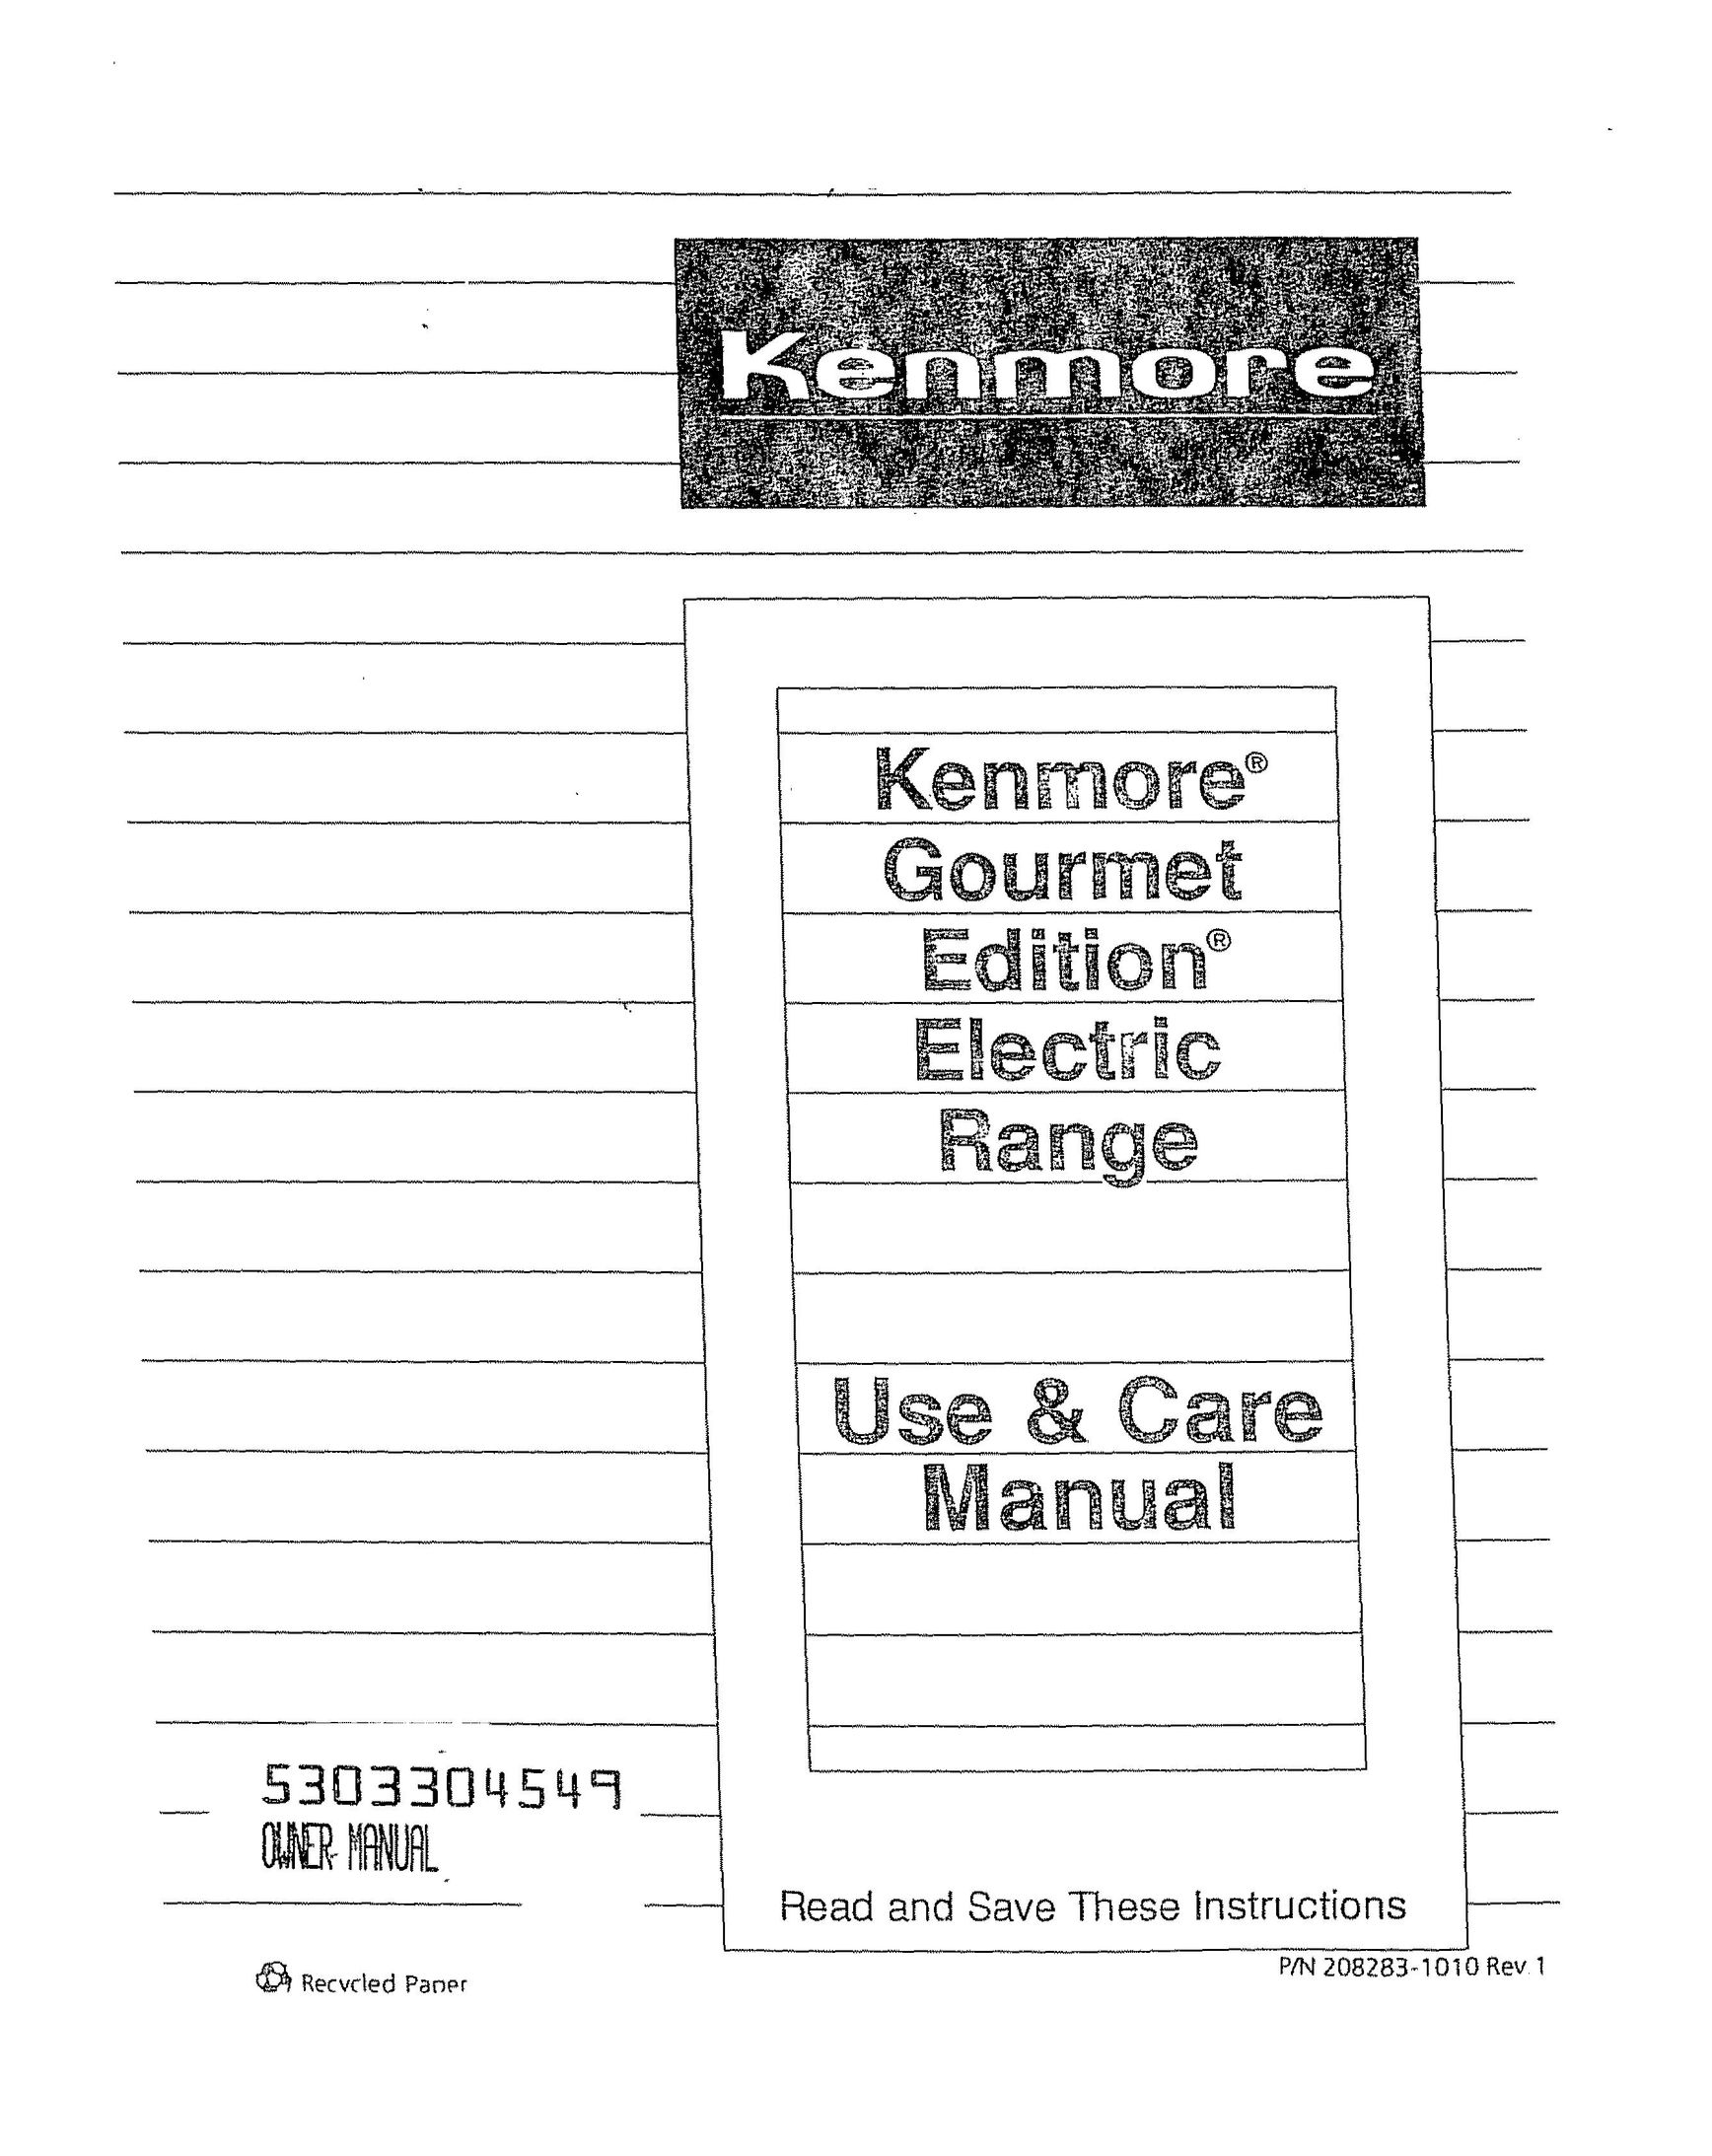 Kenmore 5303304549 Range User Manual